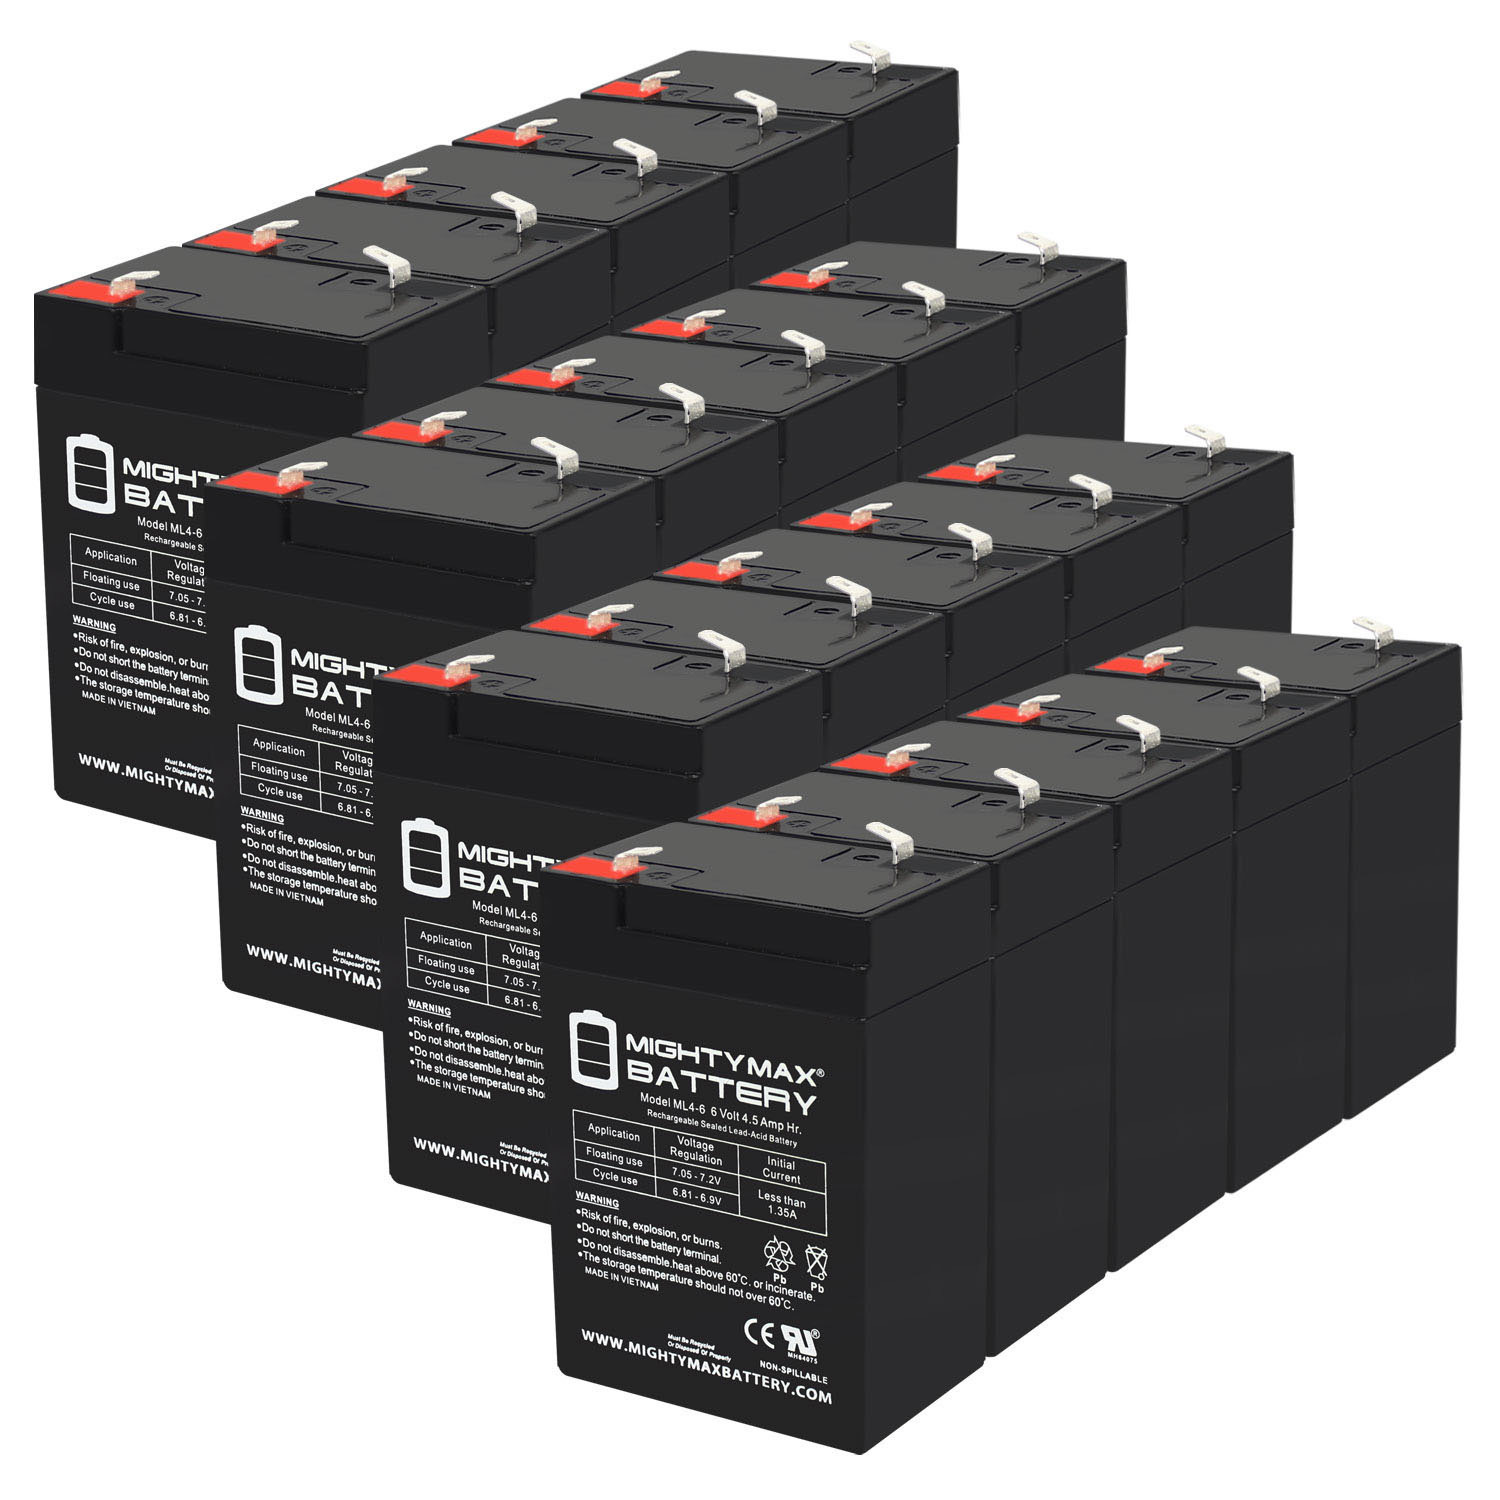 6V 4.5AH SLA Replacement Battery for Dual-Lite CVT3GW Lighting - 20 Pack